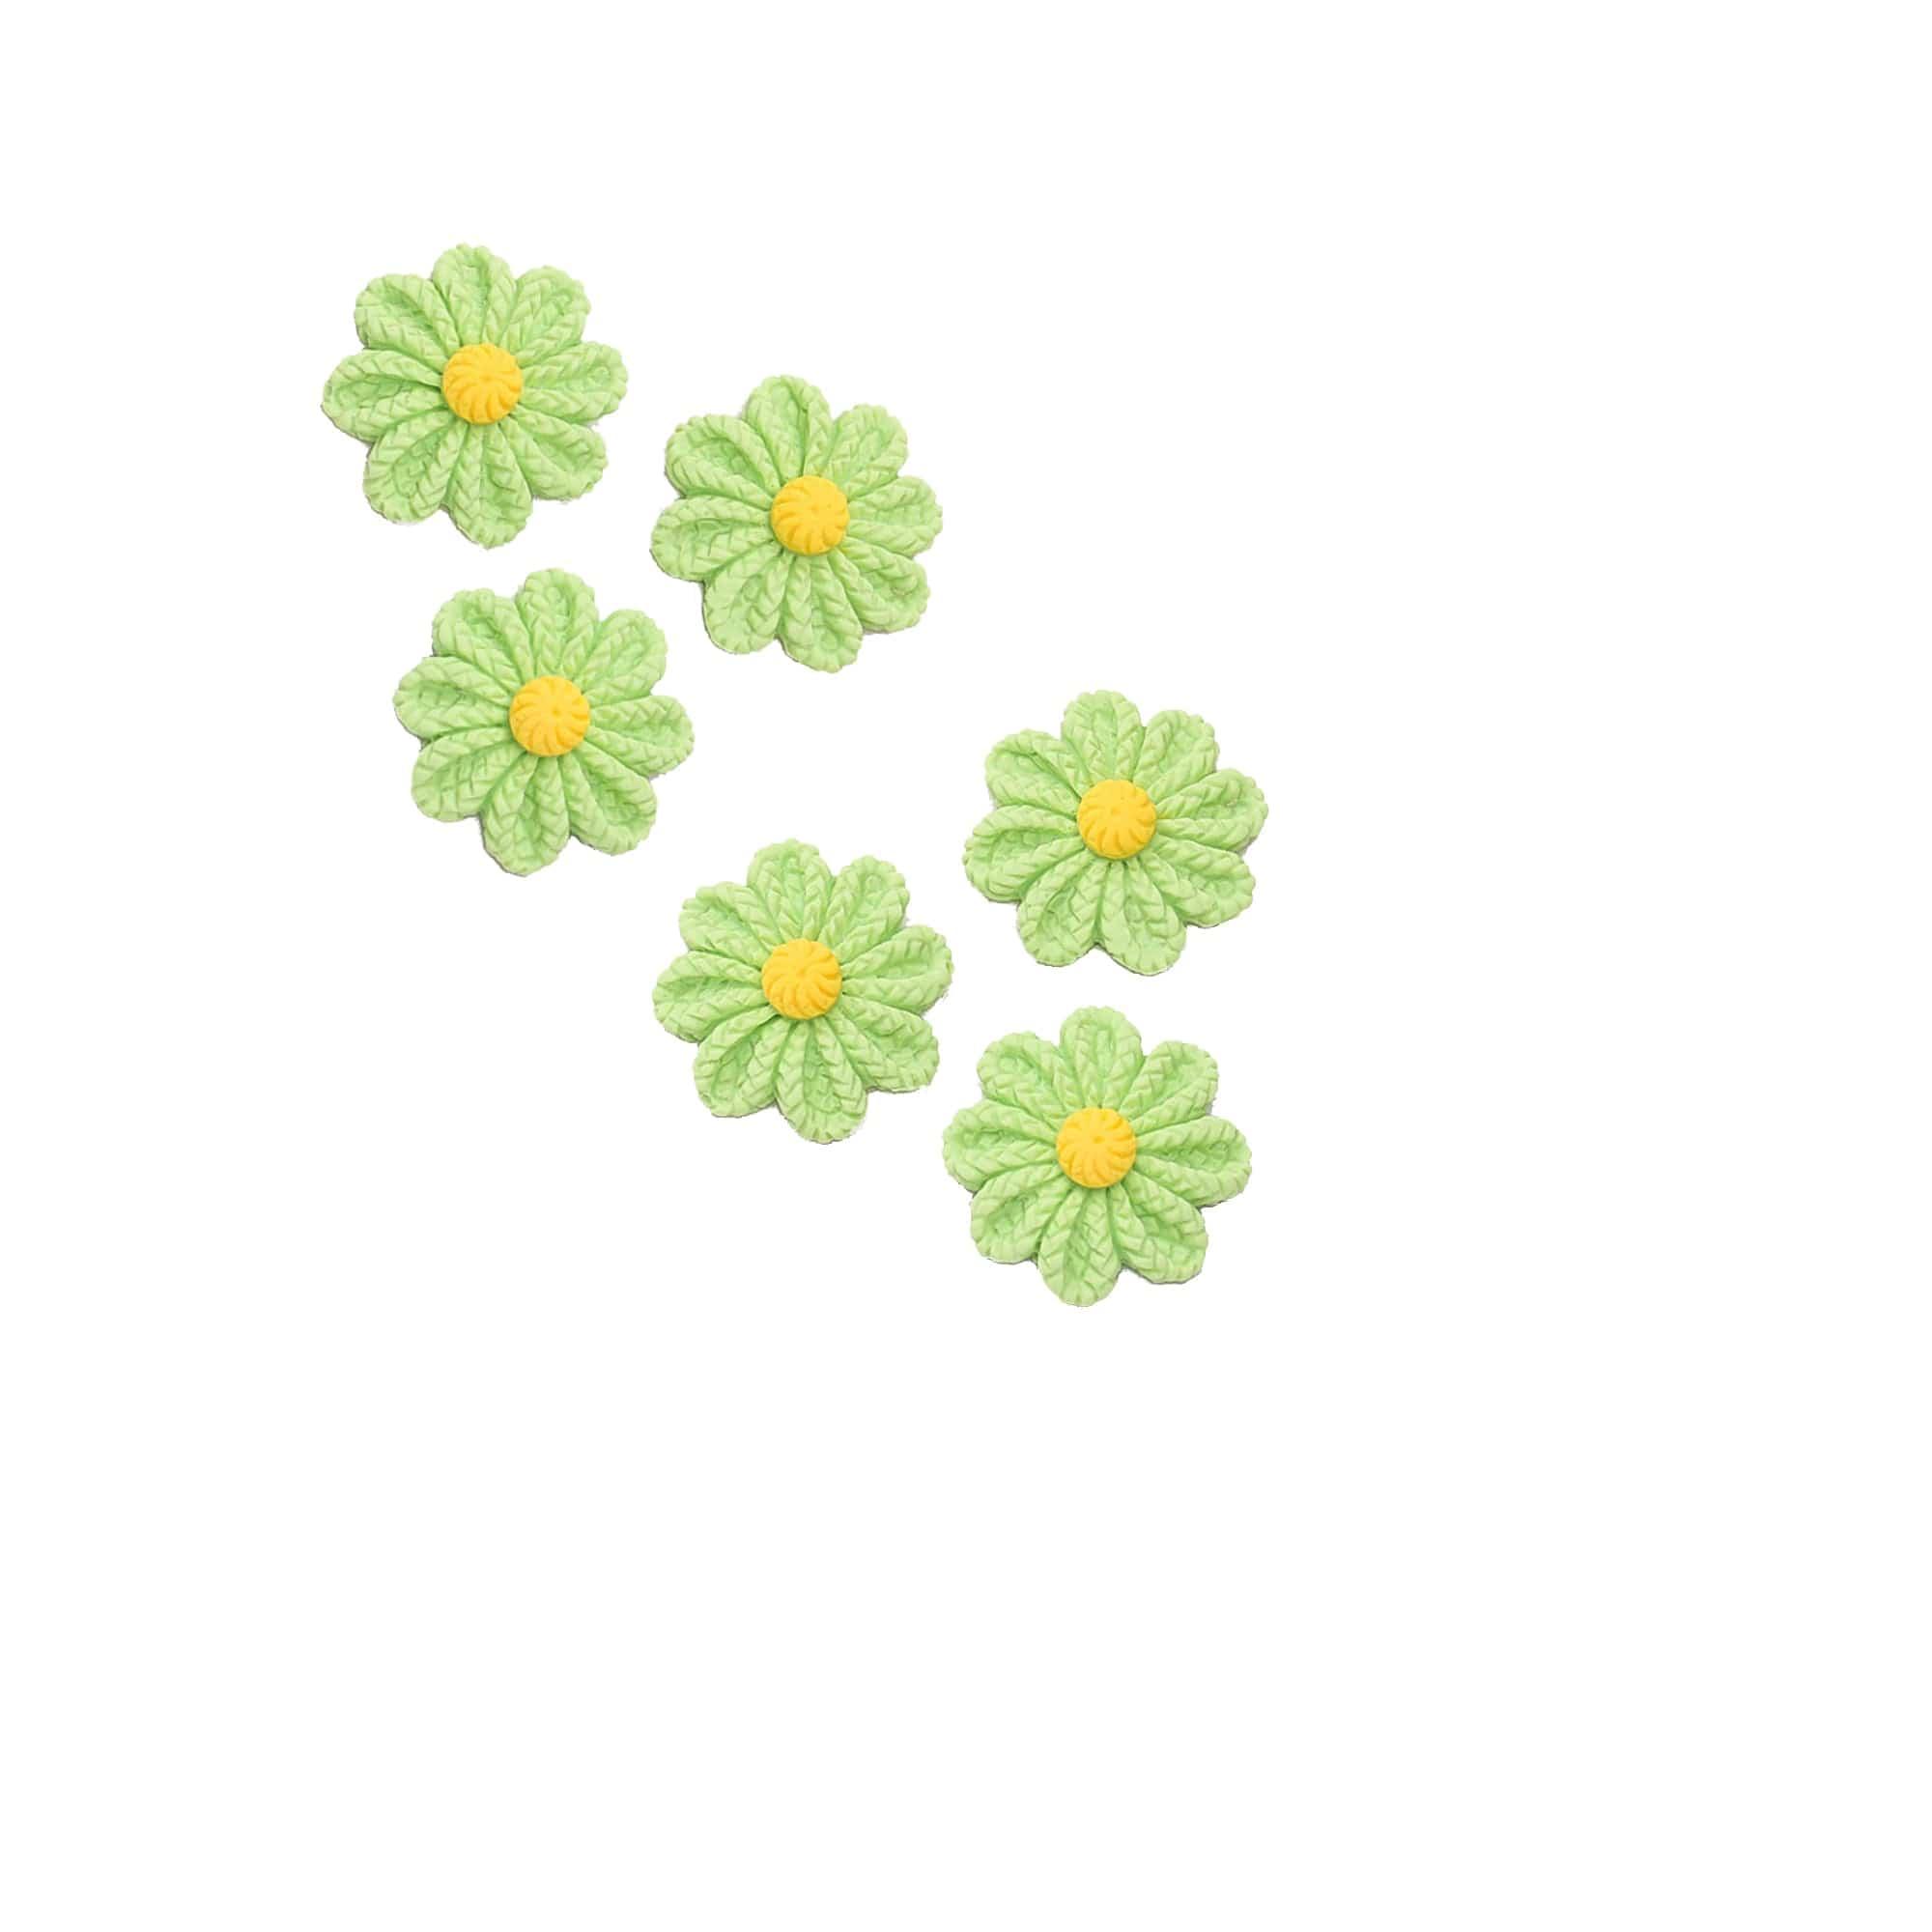 Flower Fun Collection Pastel Green Flower Flatback Scrapbook Buttons by SSC Designs - Pkg. of 5